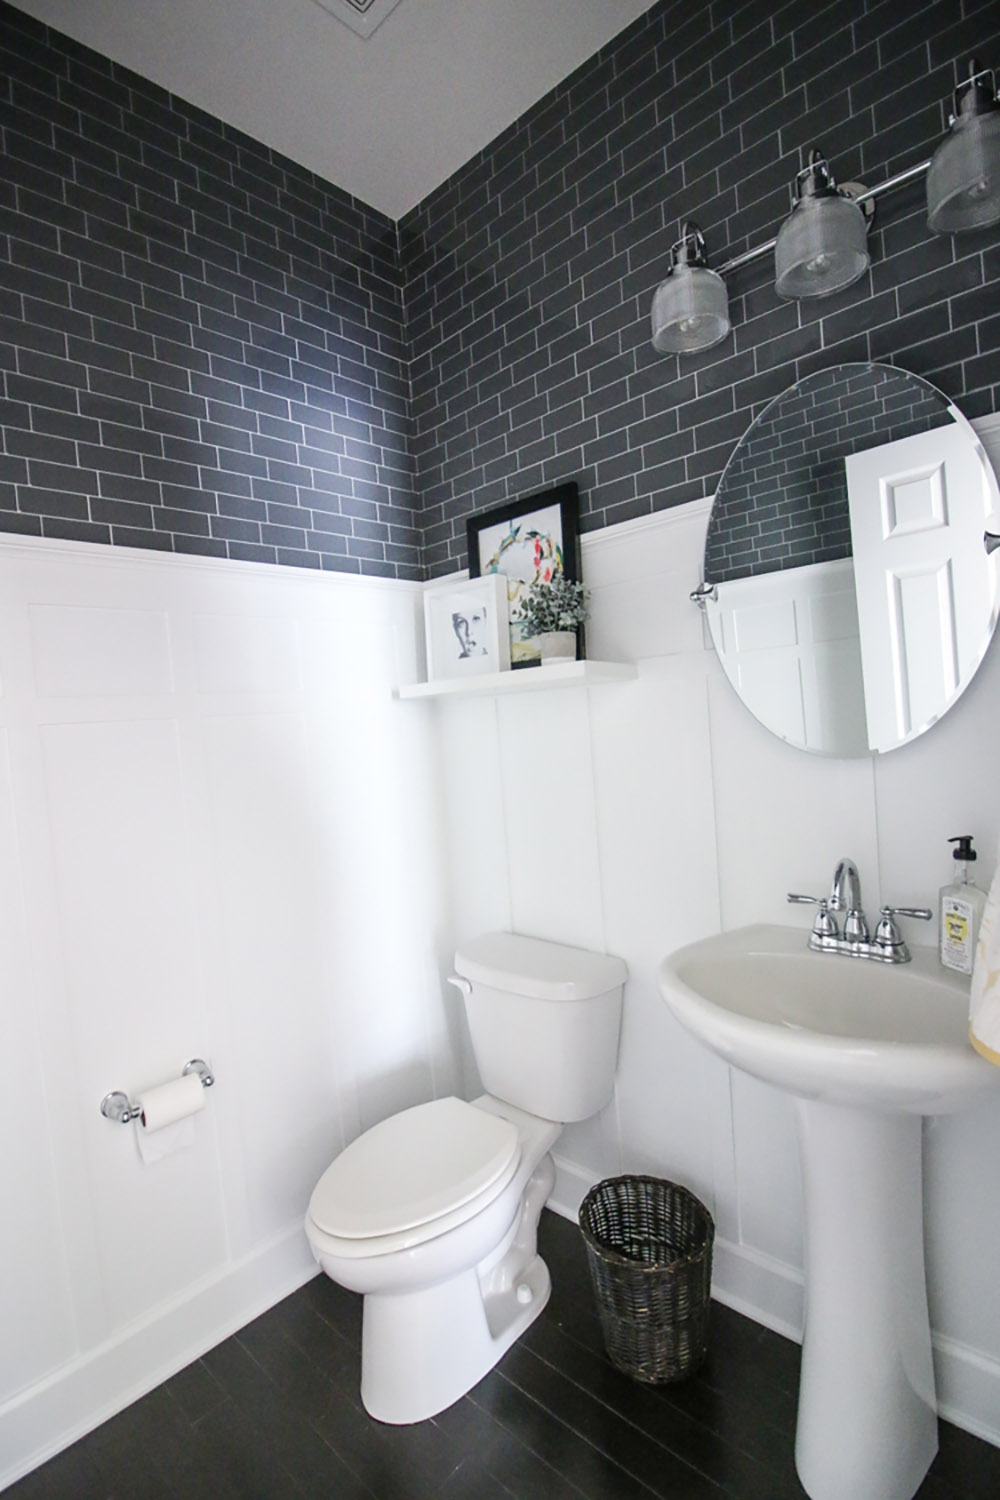 The Smarter Way to Lay Bathroom Tile